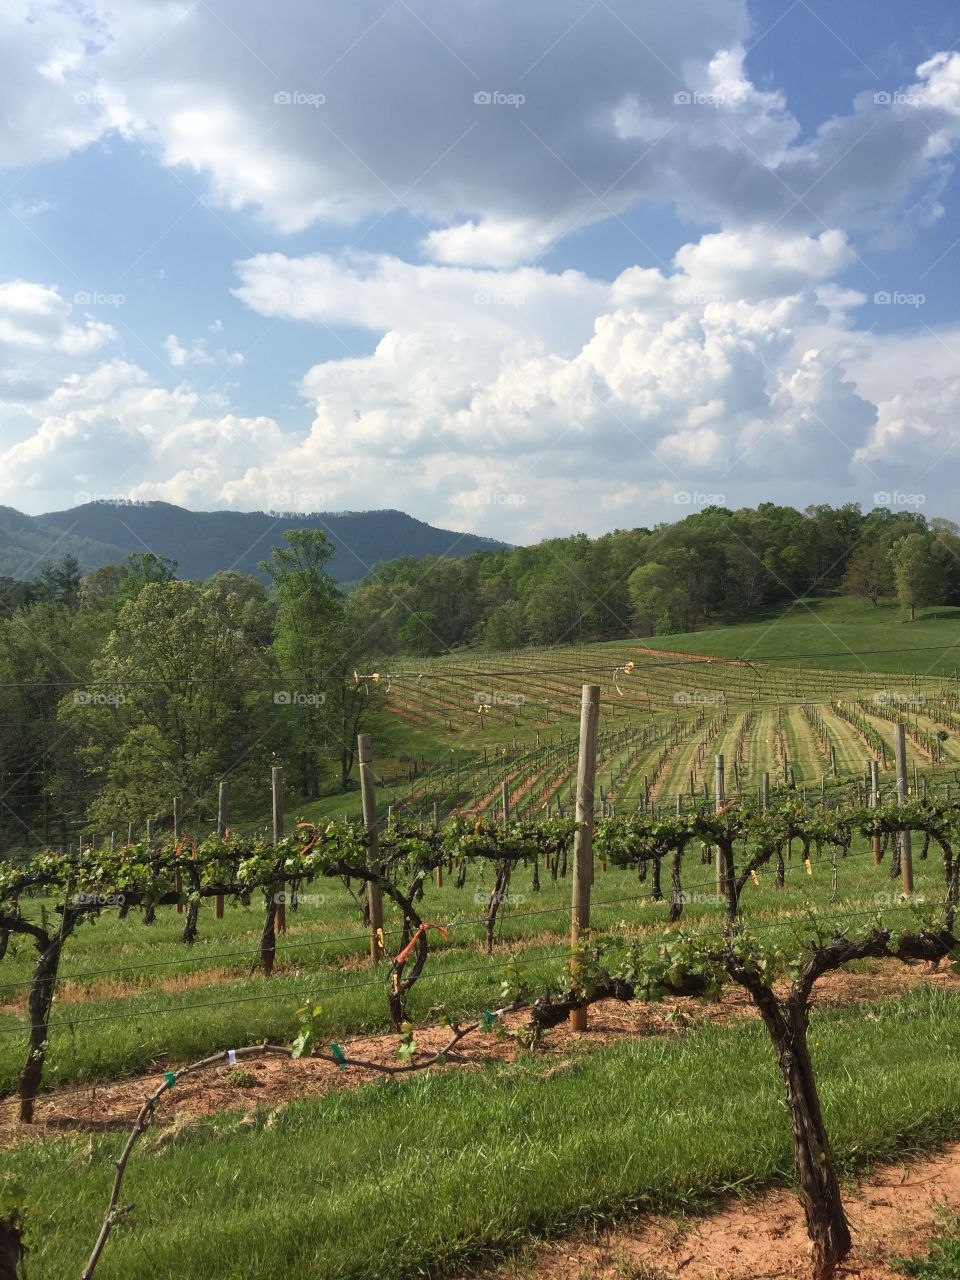 North Carolina vineyard.